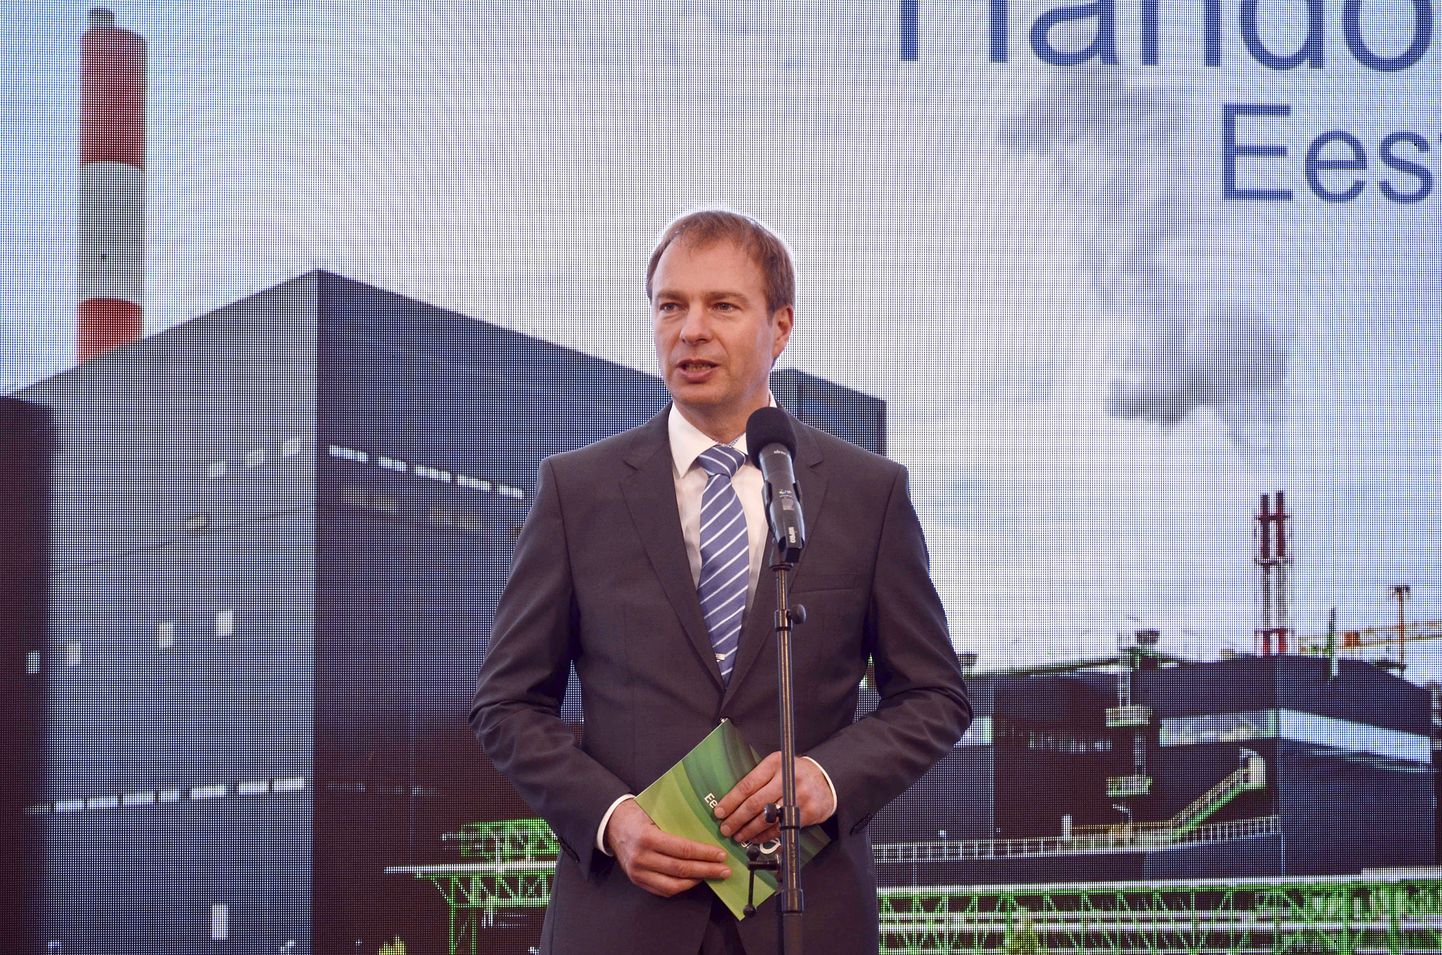 CEO of Eesti Energia Hando Sutter